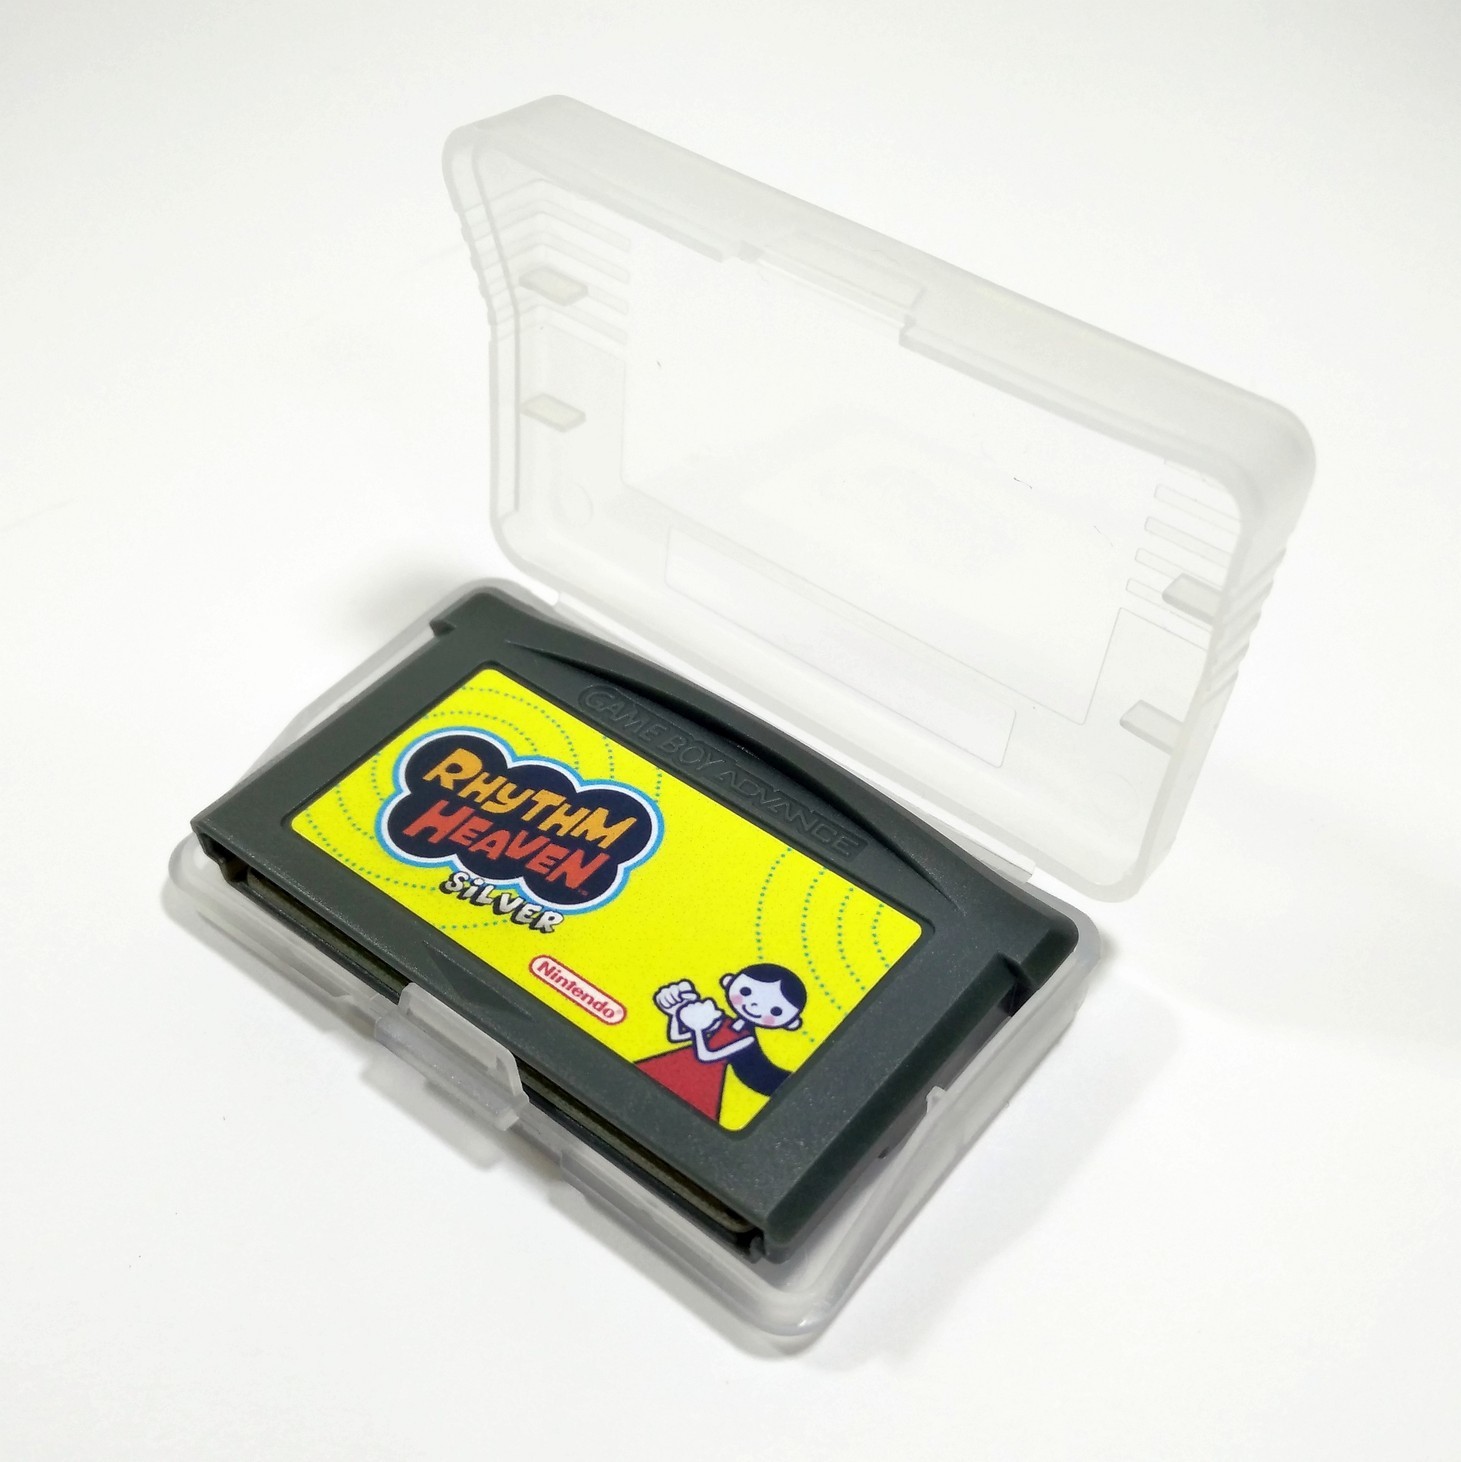 Rhythm Heaven Silver Rhythm Tengoku English Gba Cartridge For Game Boy Advance Video Games 7416